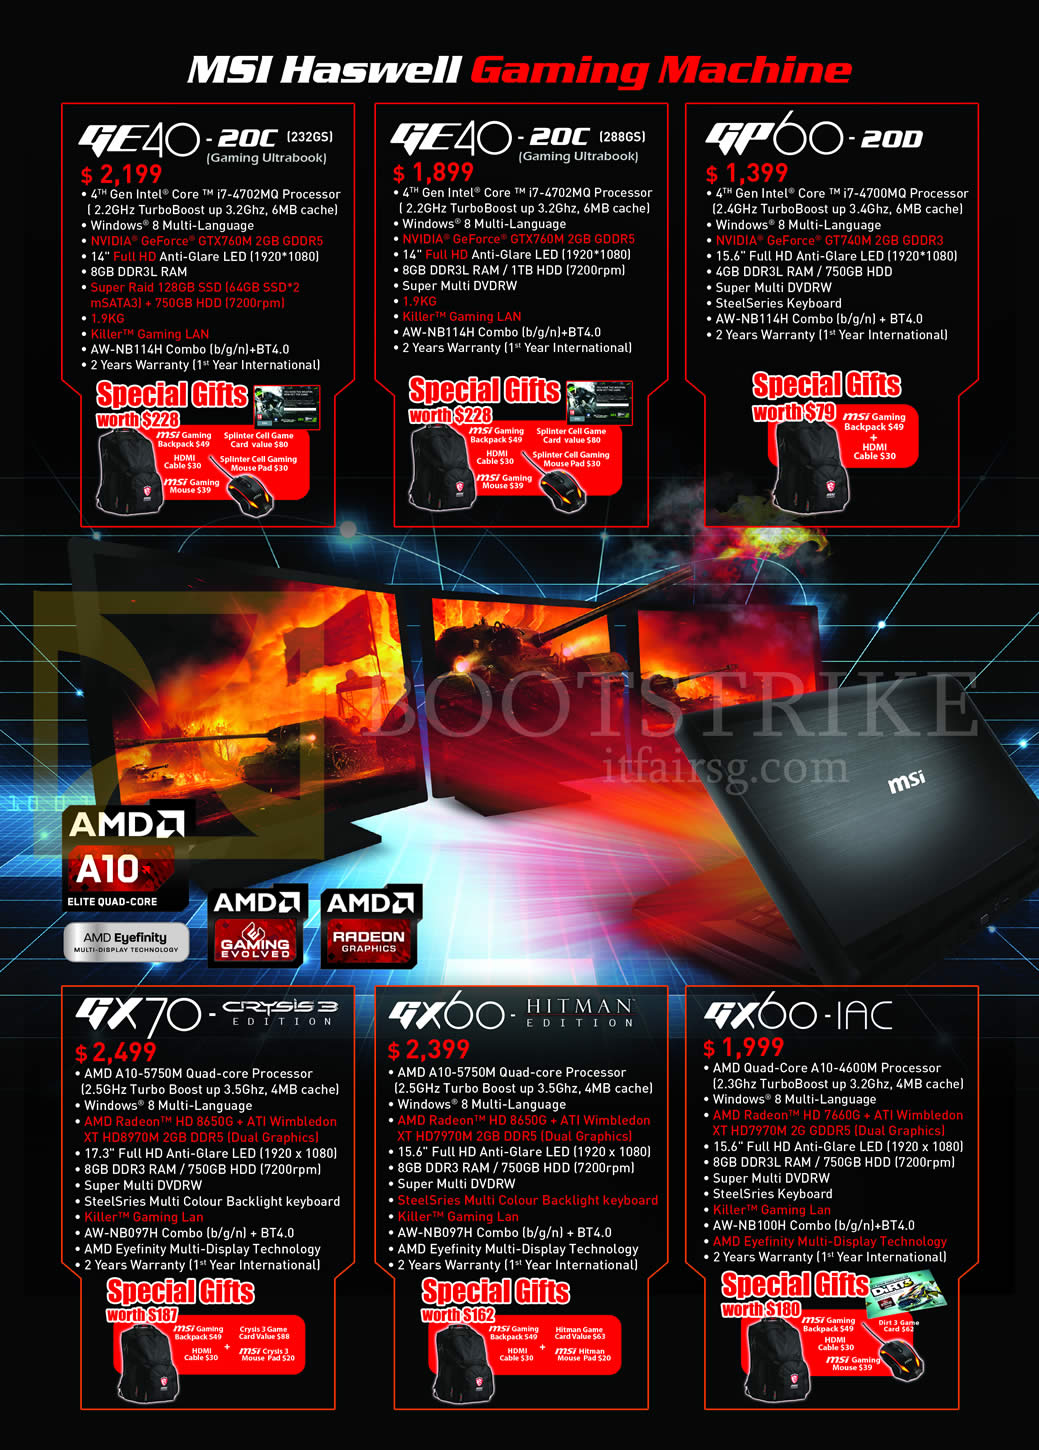 SITEX 2013 price list image brochure of MSI Desktop PCs Gaming Haswell GE40-20C, GP60-20D, AMD GX70-Crysis3, GX60-Hitman, GX60-1AC